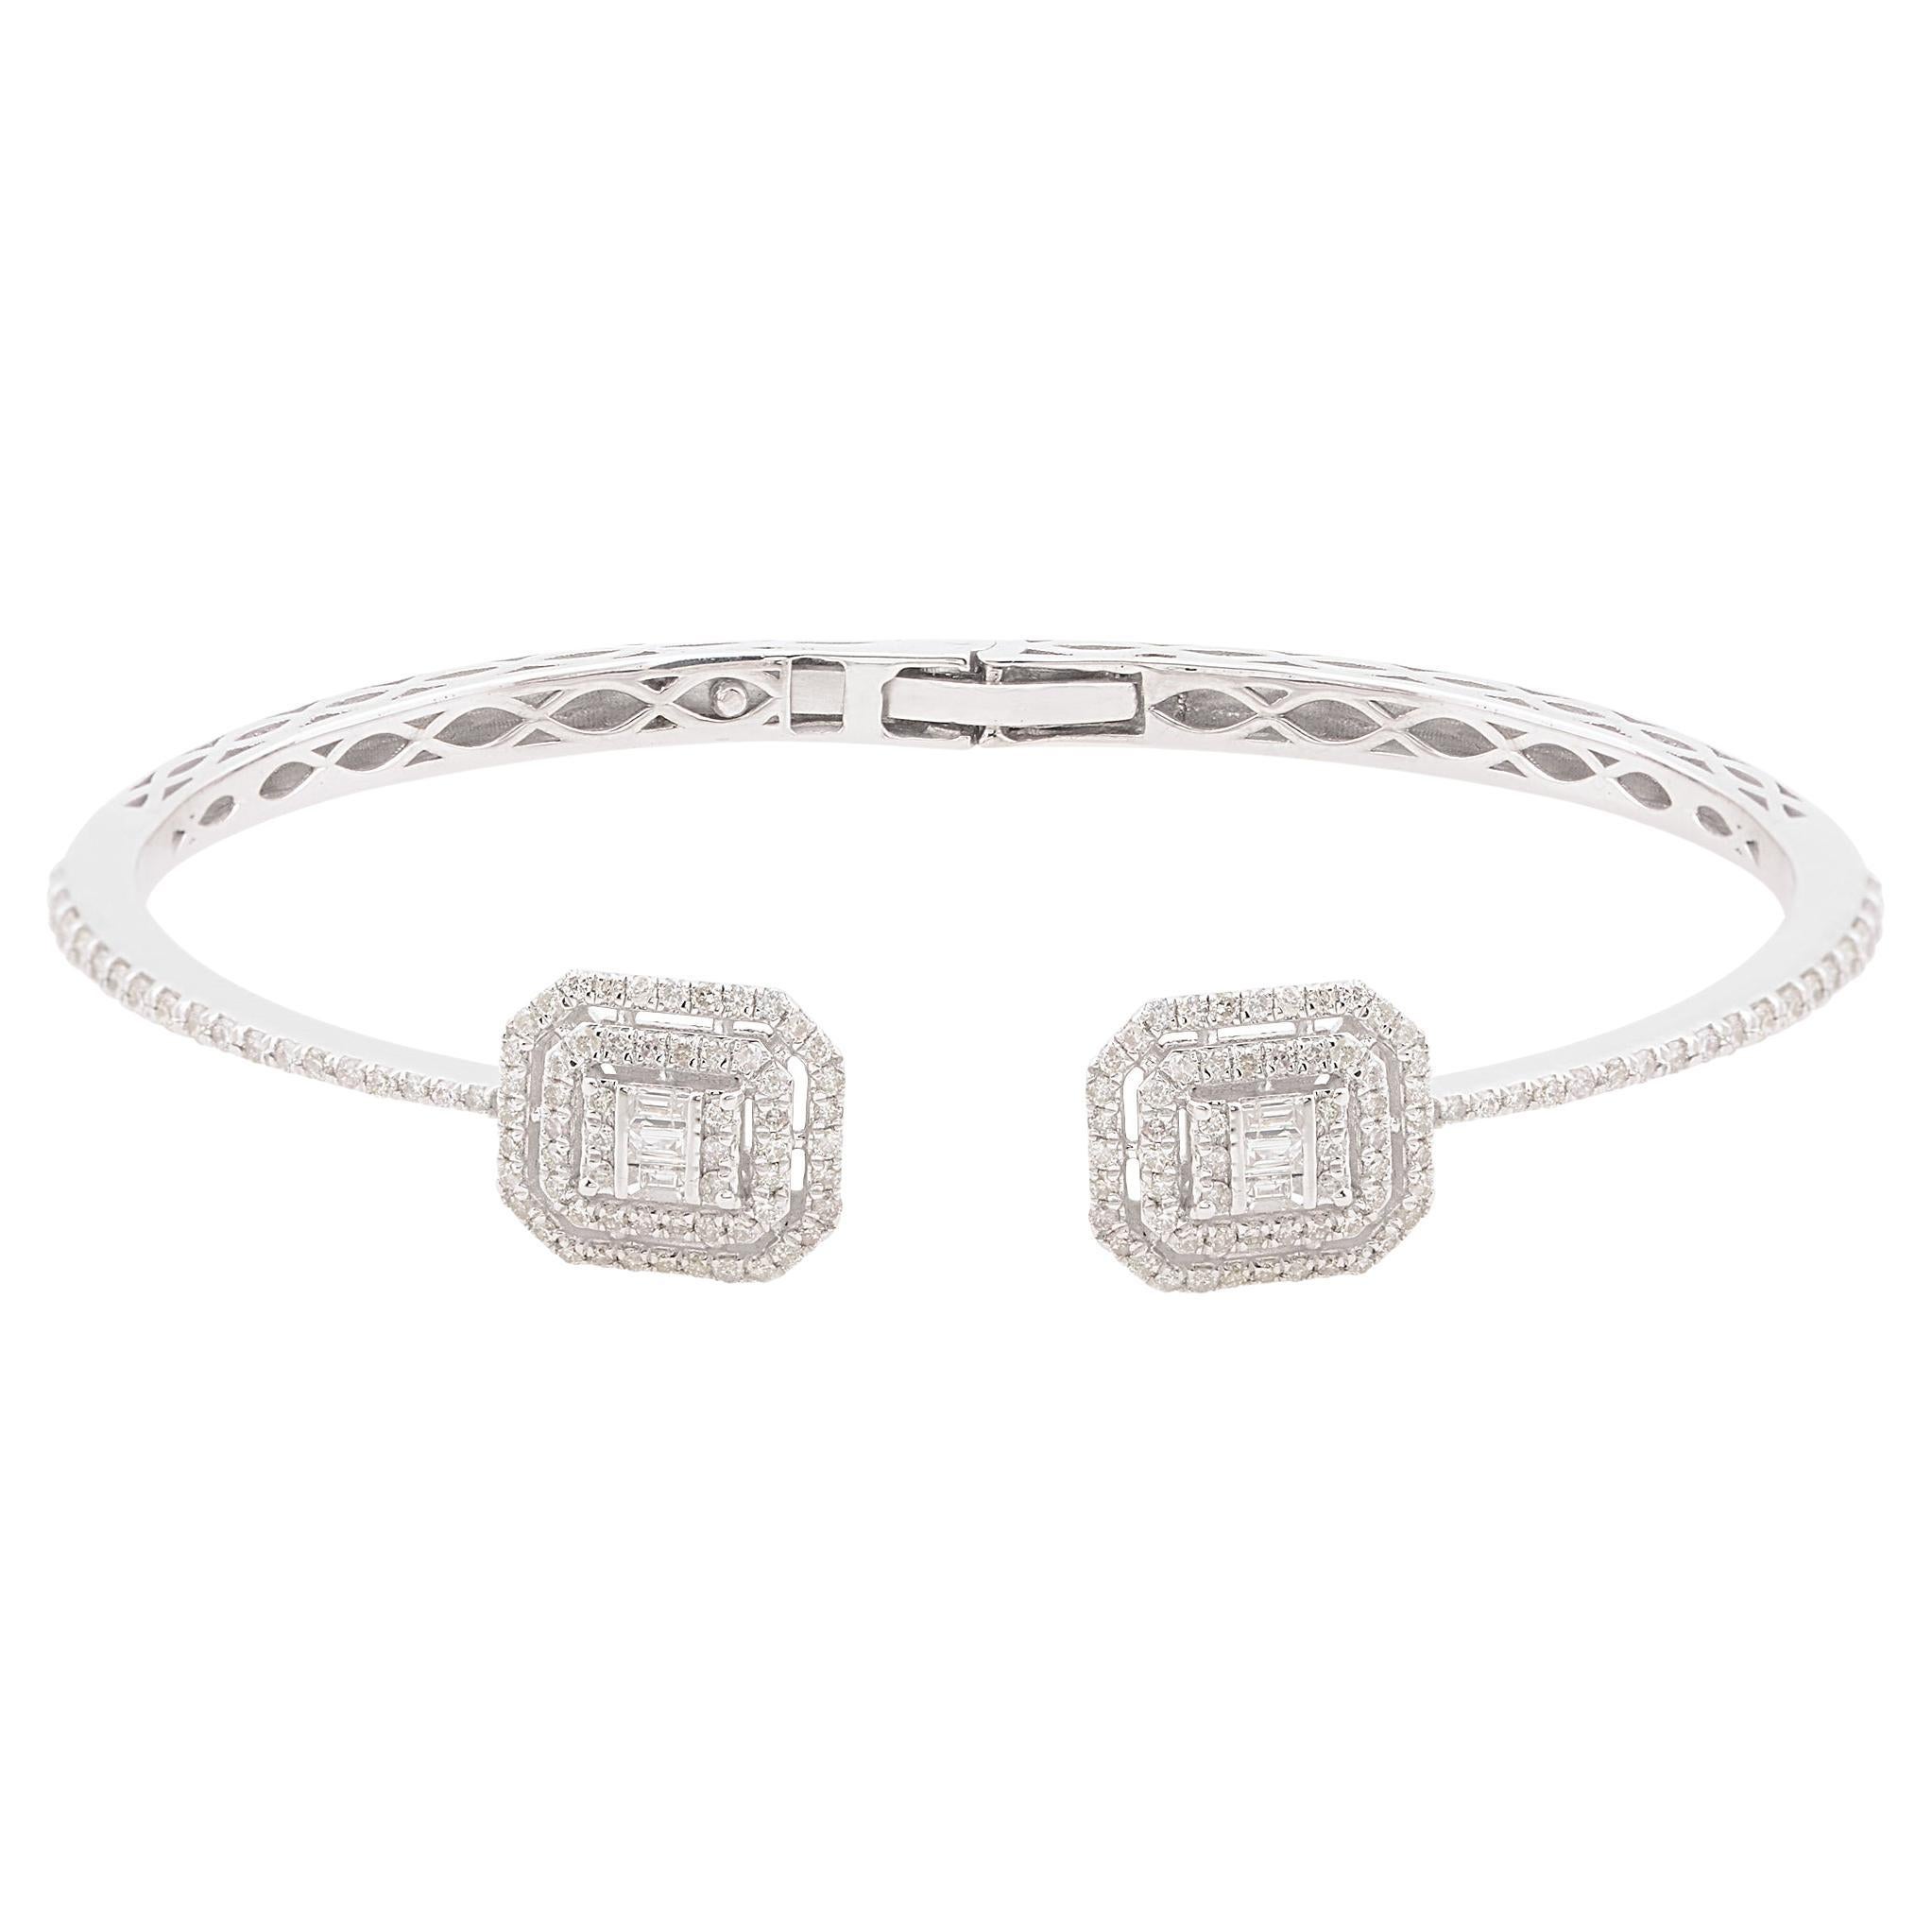 1.20 Carat Baguette Diamond Cuff Bangle Bracelet Solid 10k White Gold Jewelry For Sale